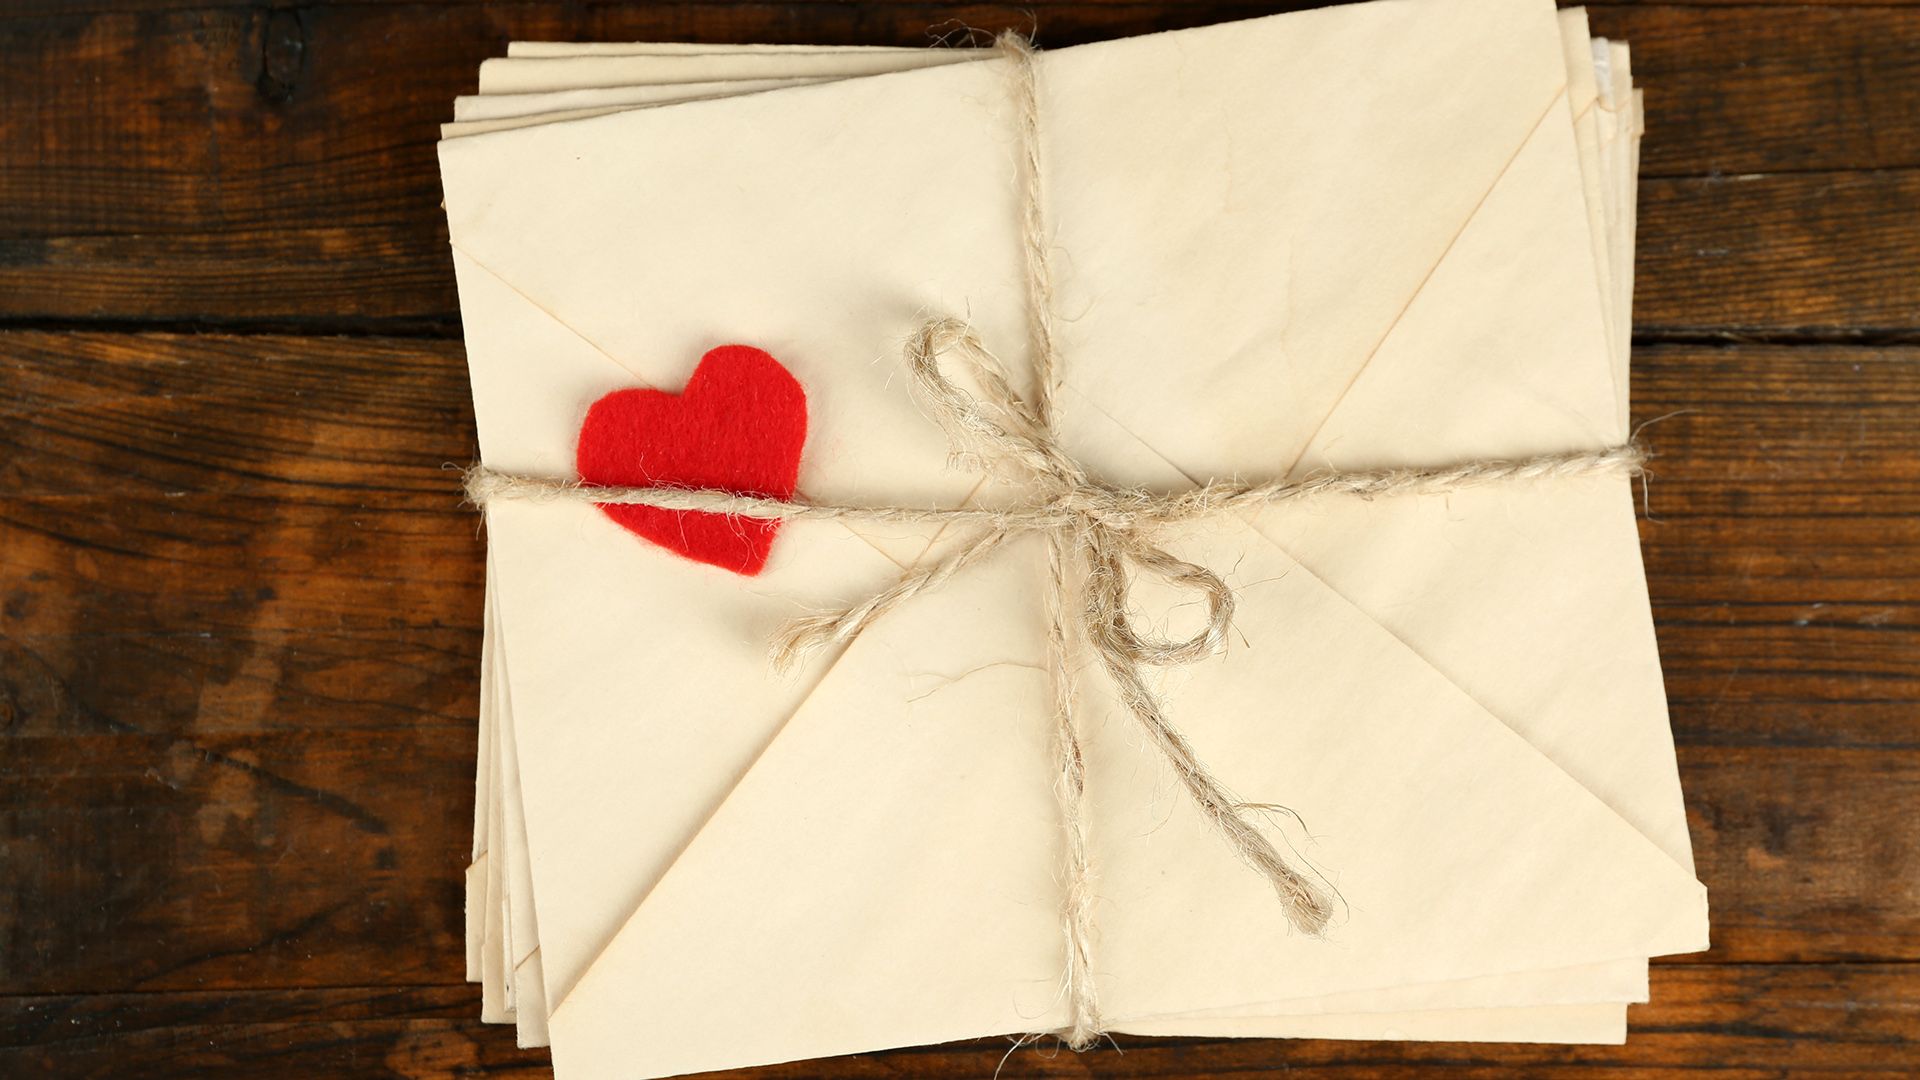 Phrases of self-love for Valentine's Day.  (Shutterstock)